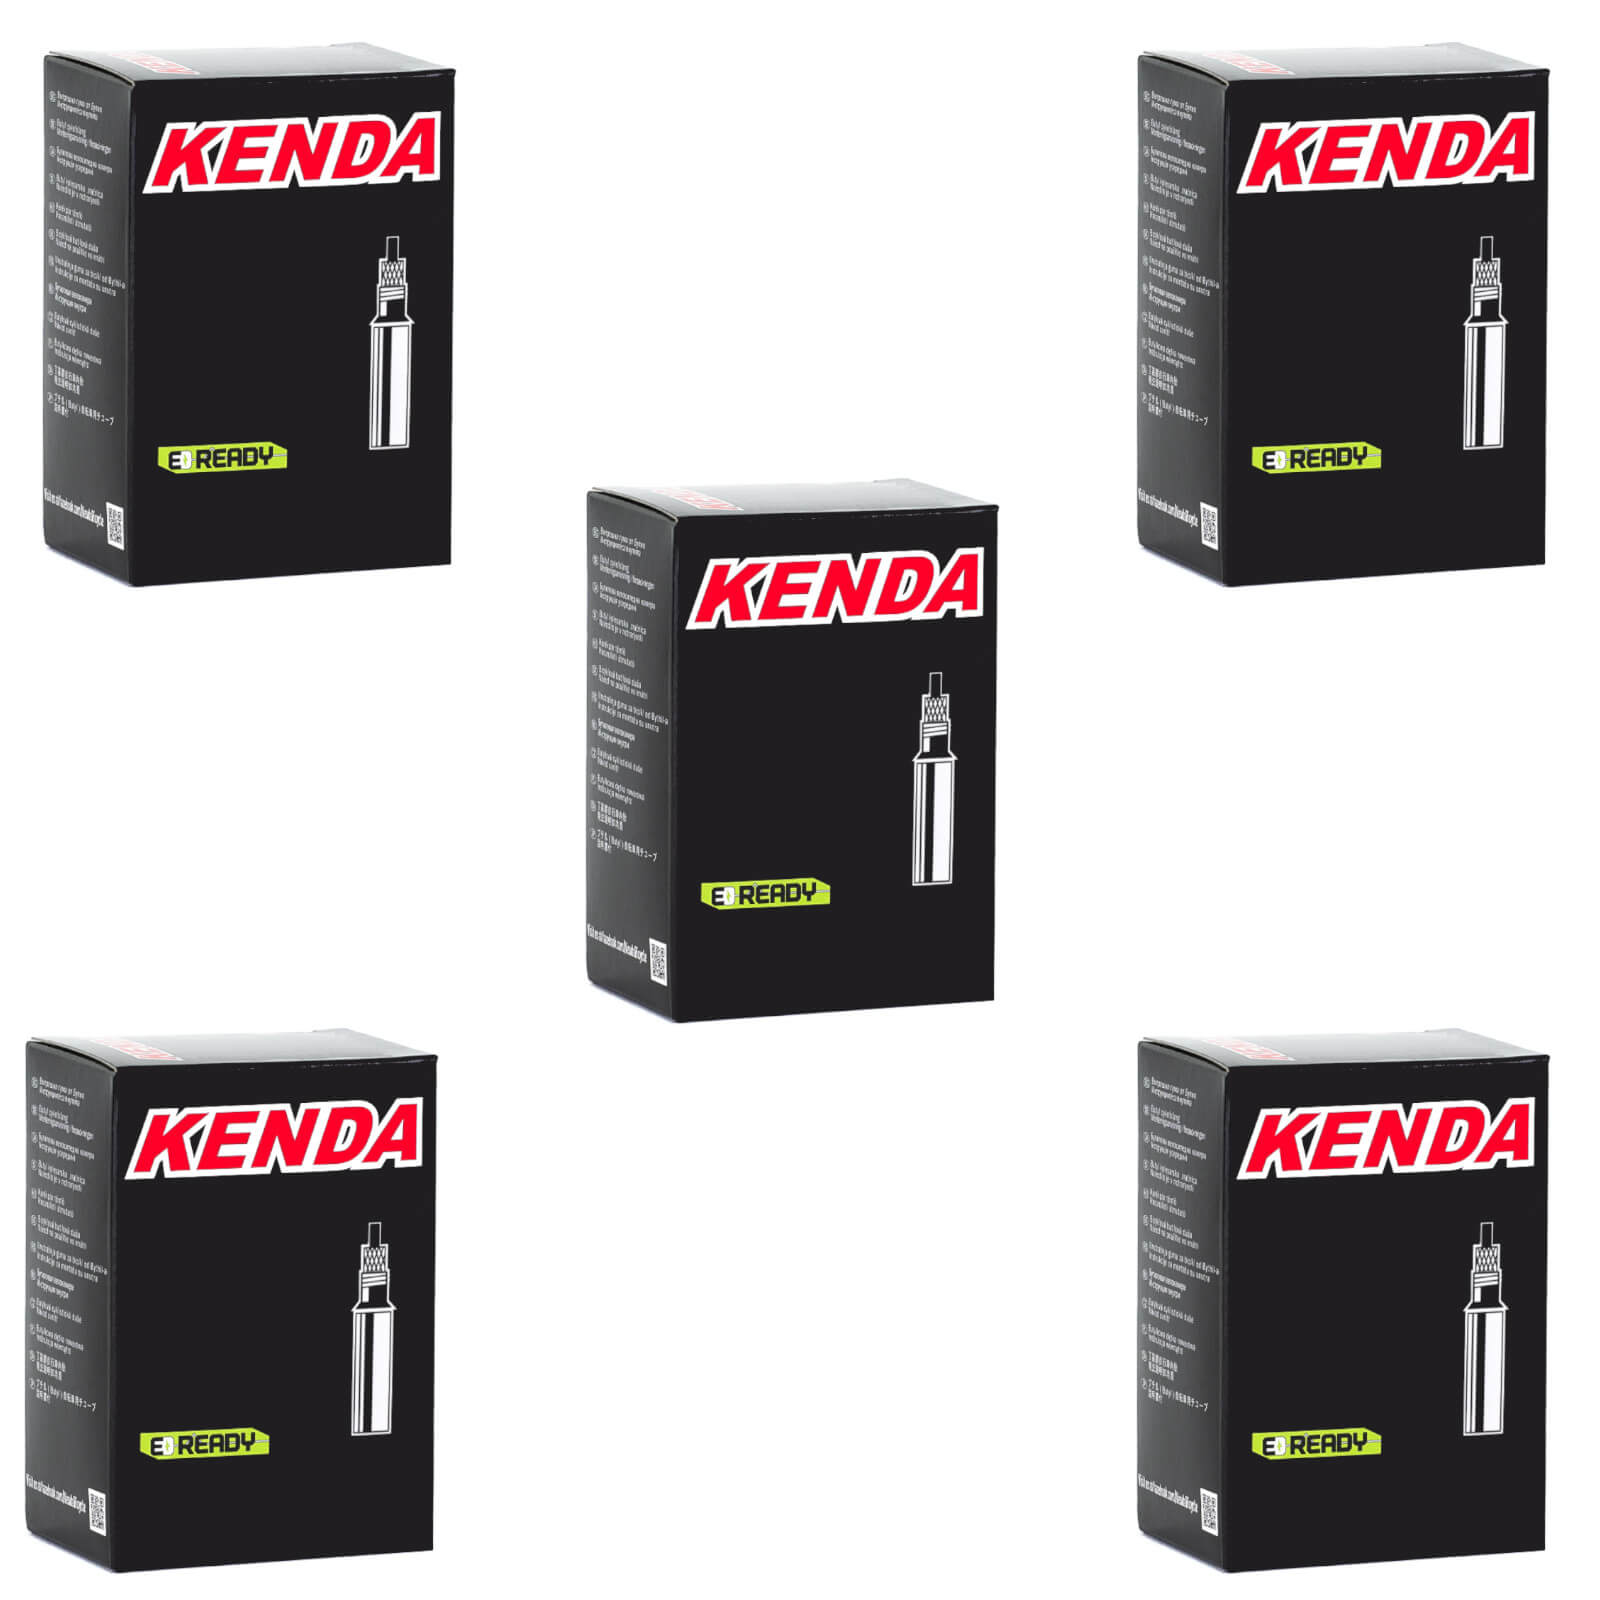 Kenda 27.5x2.8-3.0" Removable Core 27.5 Inch Presta Valve Bike Inner Tube Pack of 5